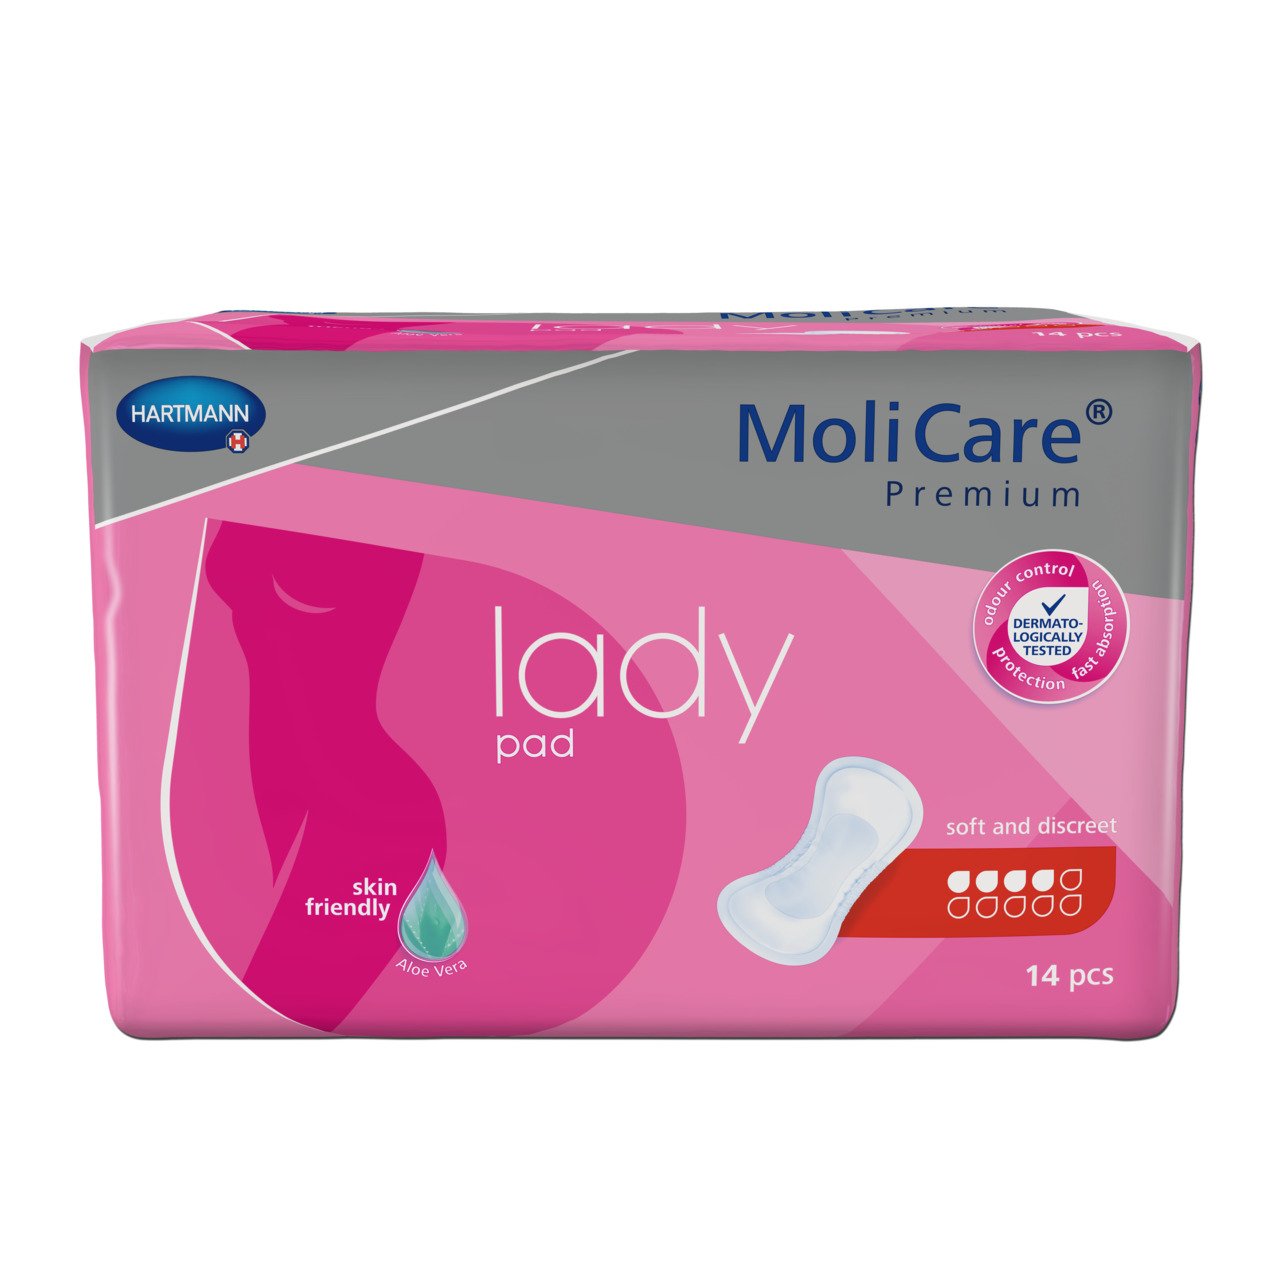 MoliCare Premium Lady Pad 4 drops 168